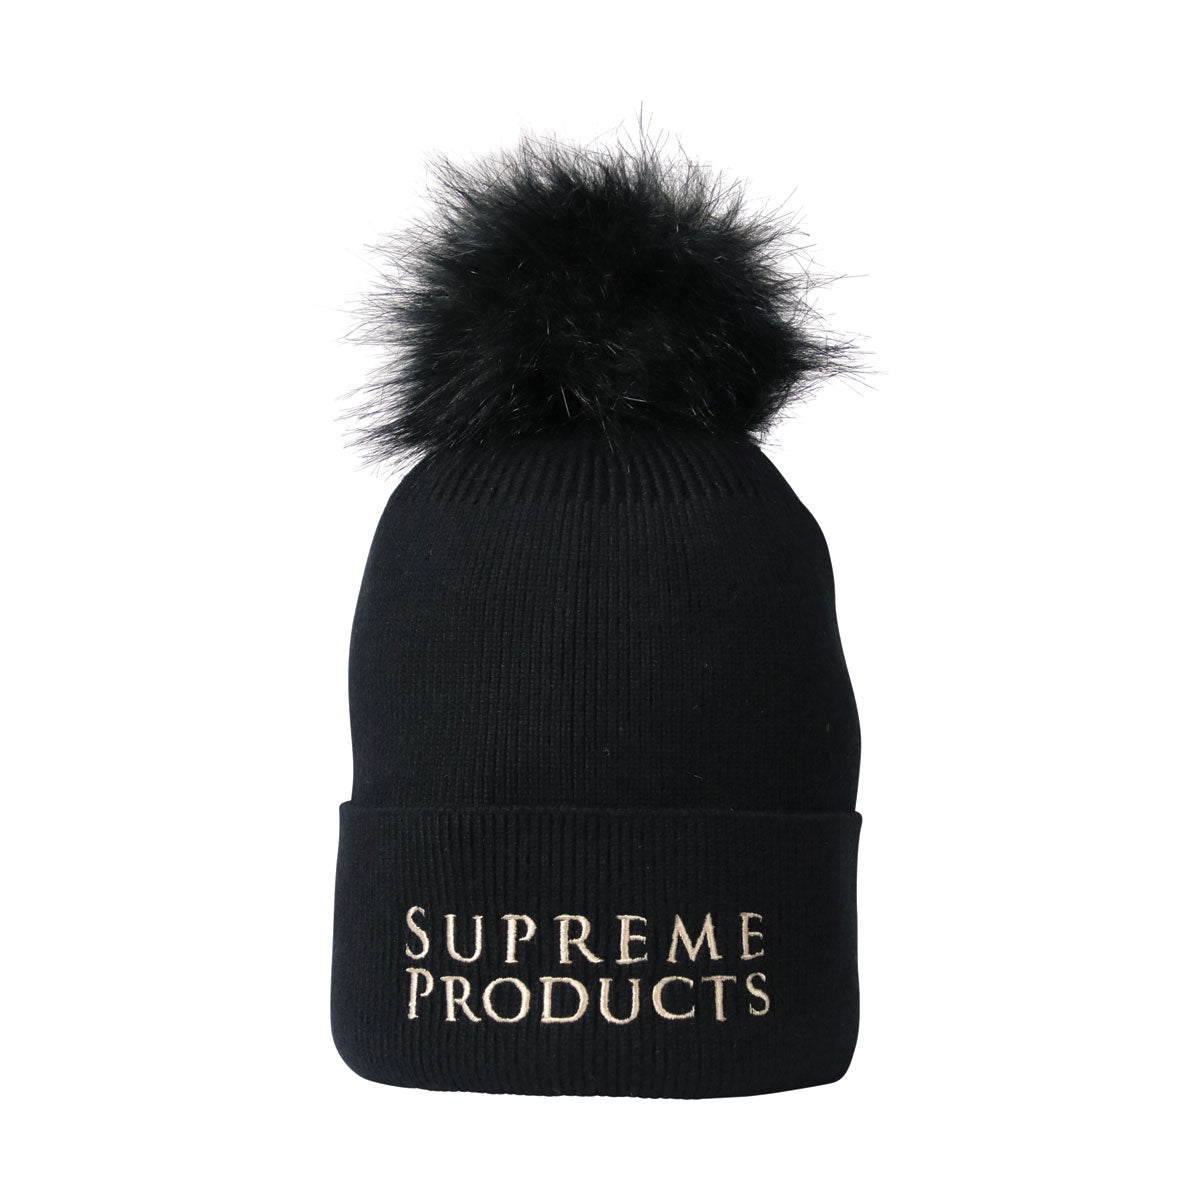 Supreme Products Bobble Hat